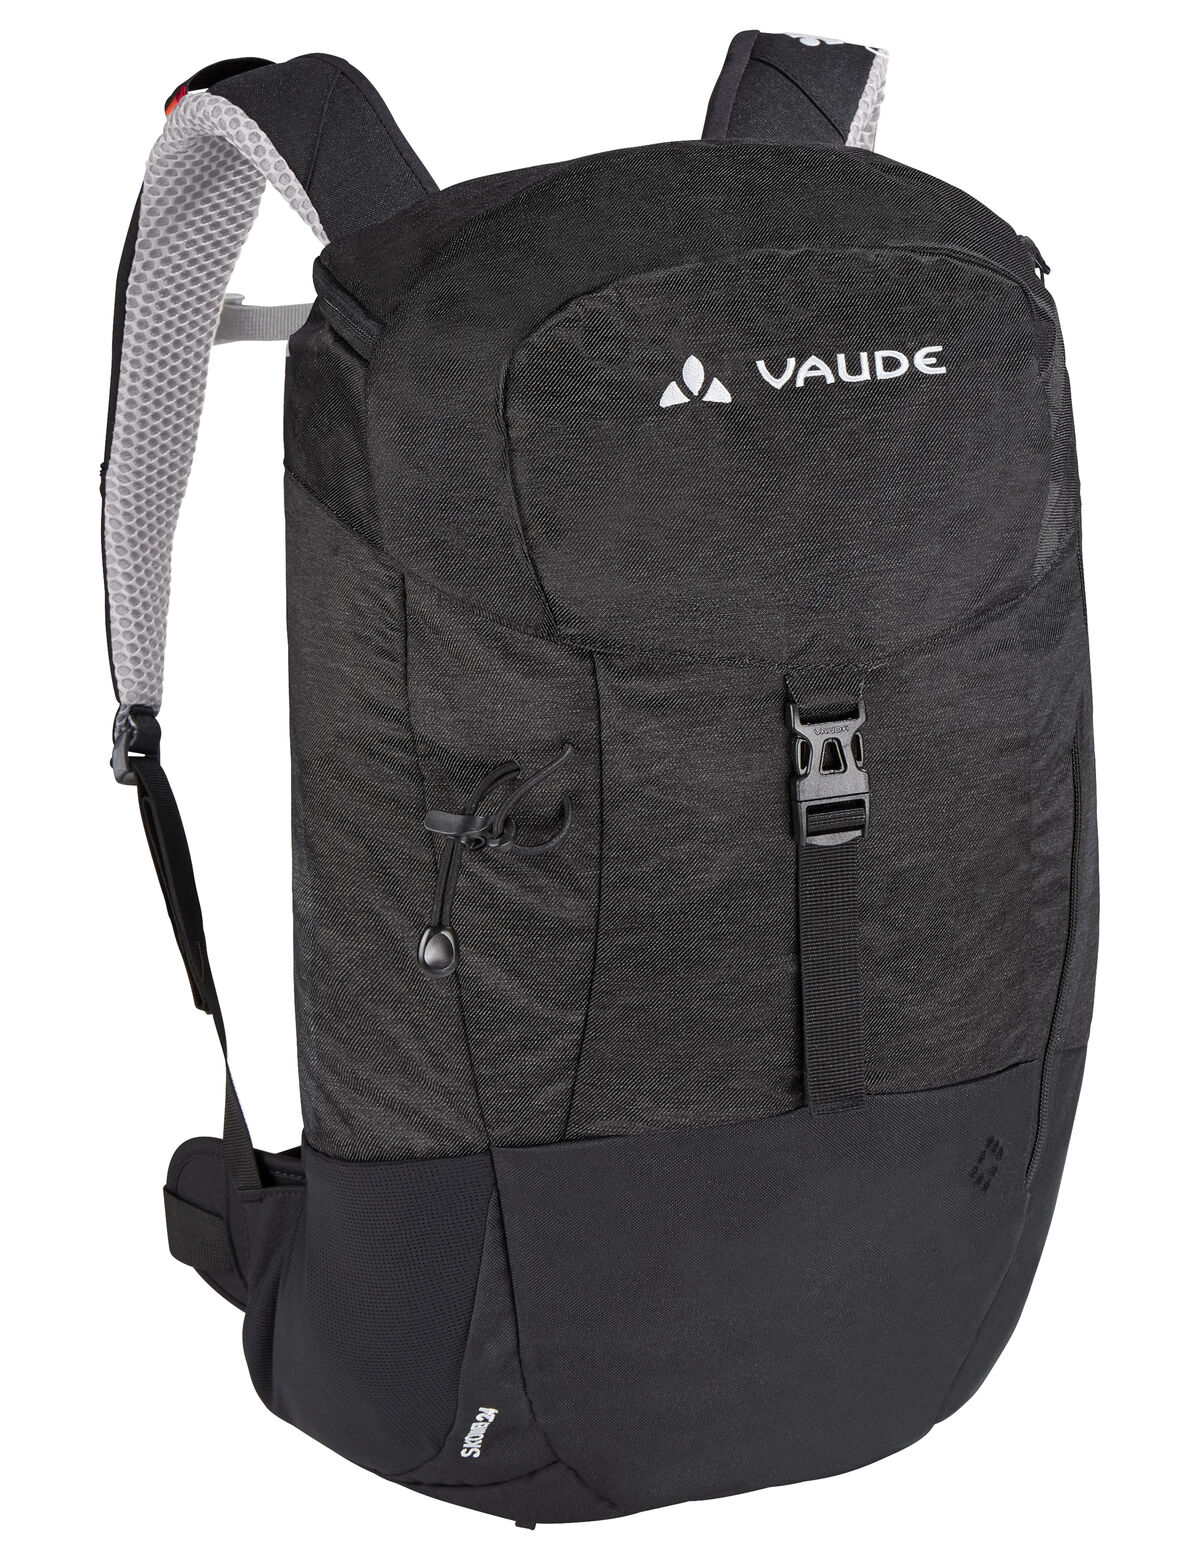 Vaude - Skomer 24 - Hiking backpack - Women's